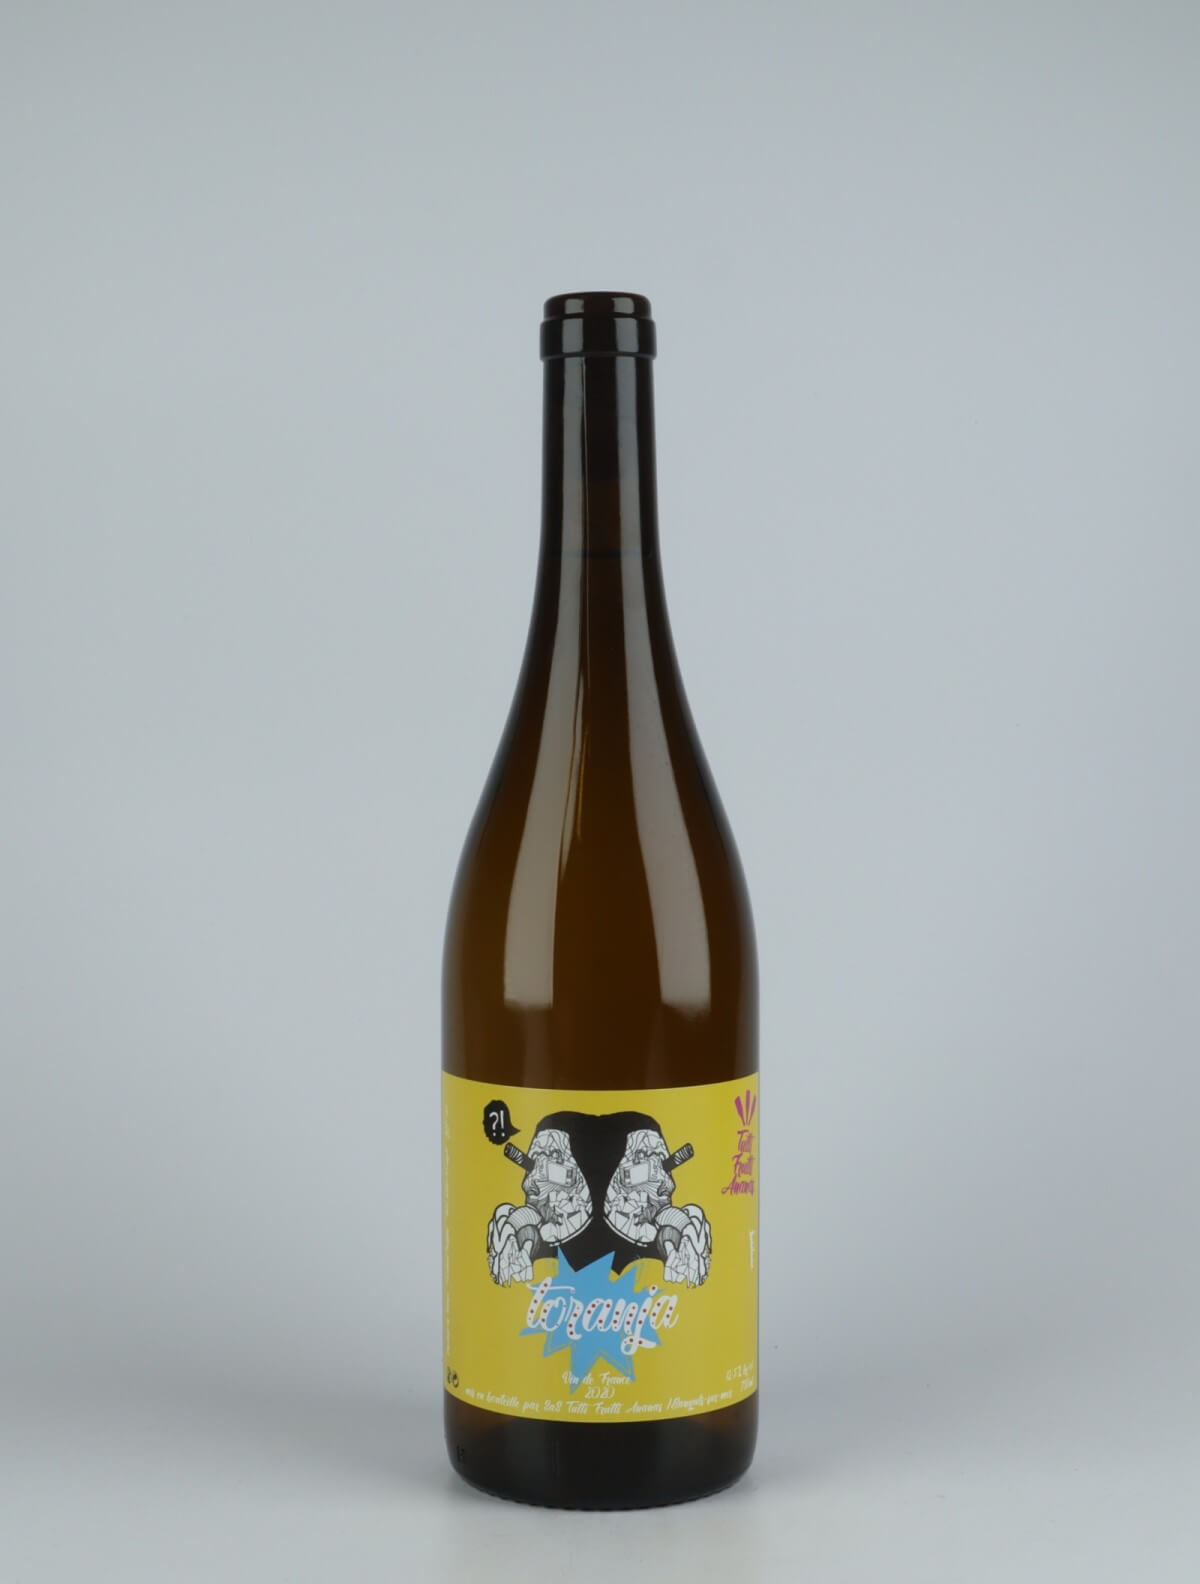 A bottle 2020 Toranja White wine from Tutti Frutti Ananas, Rousillon in France